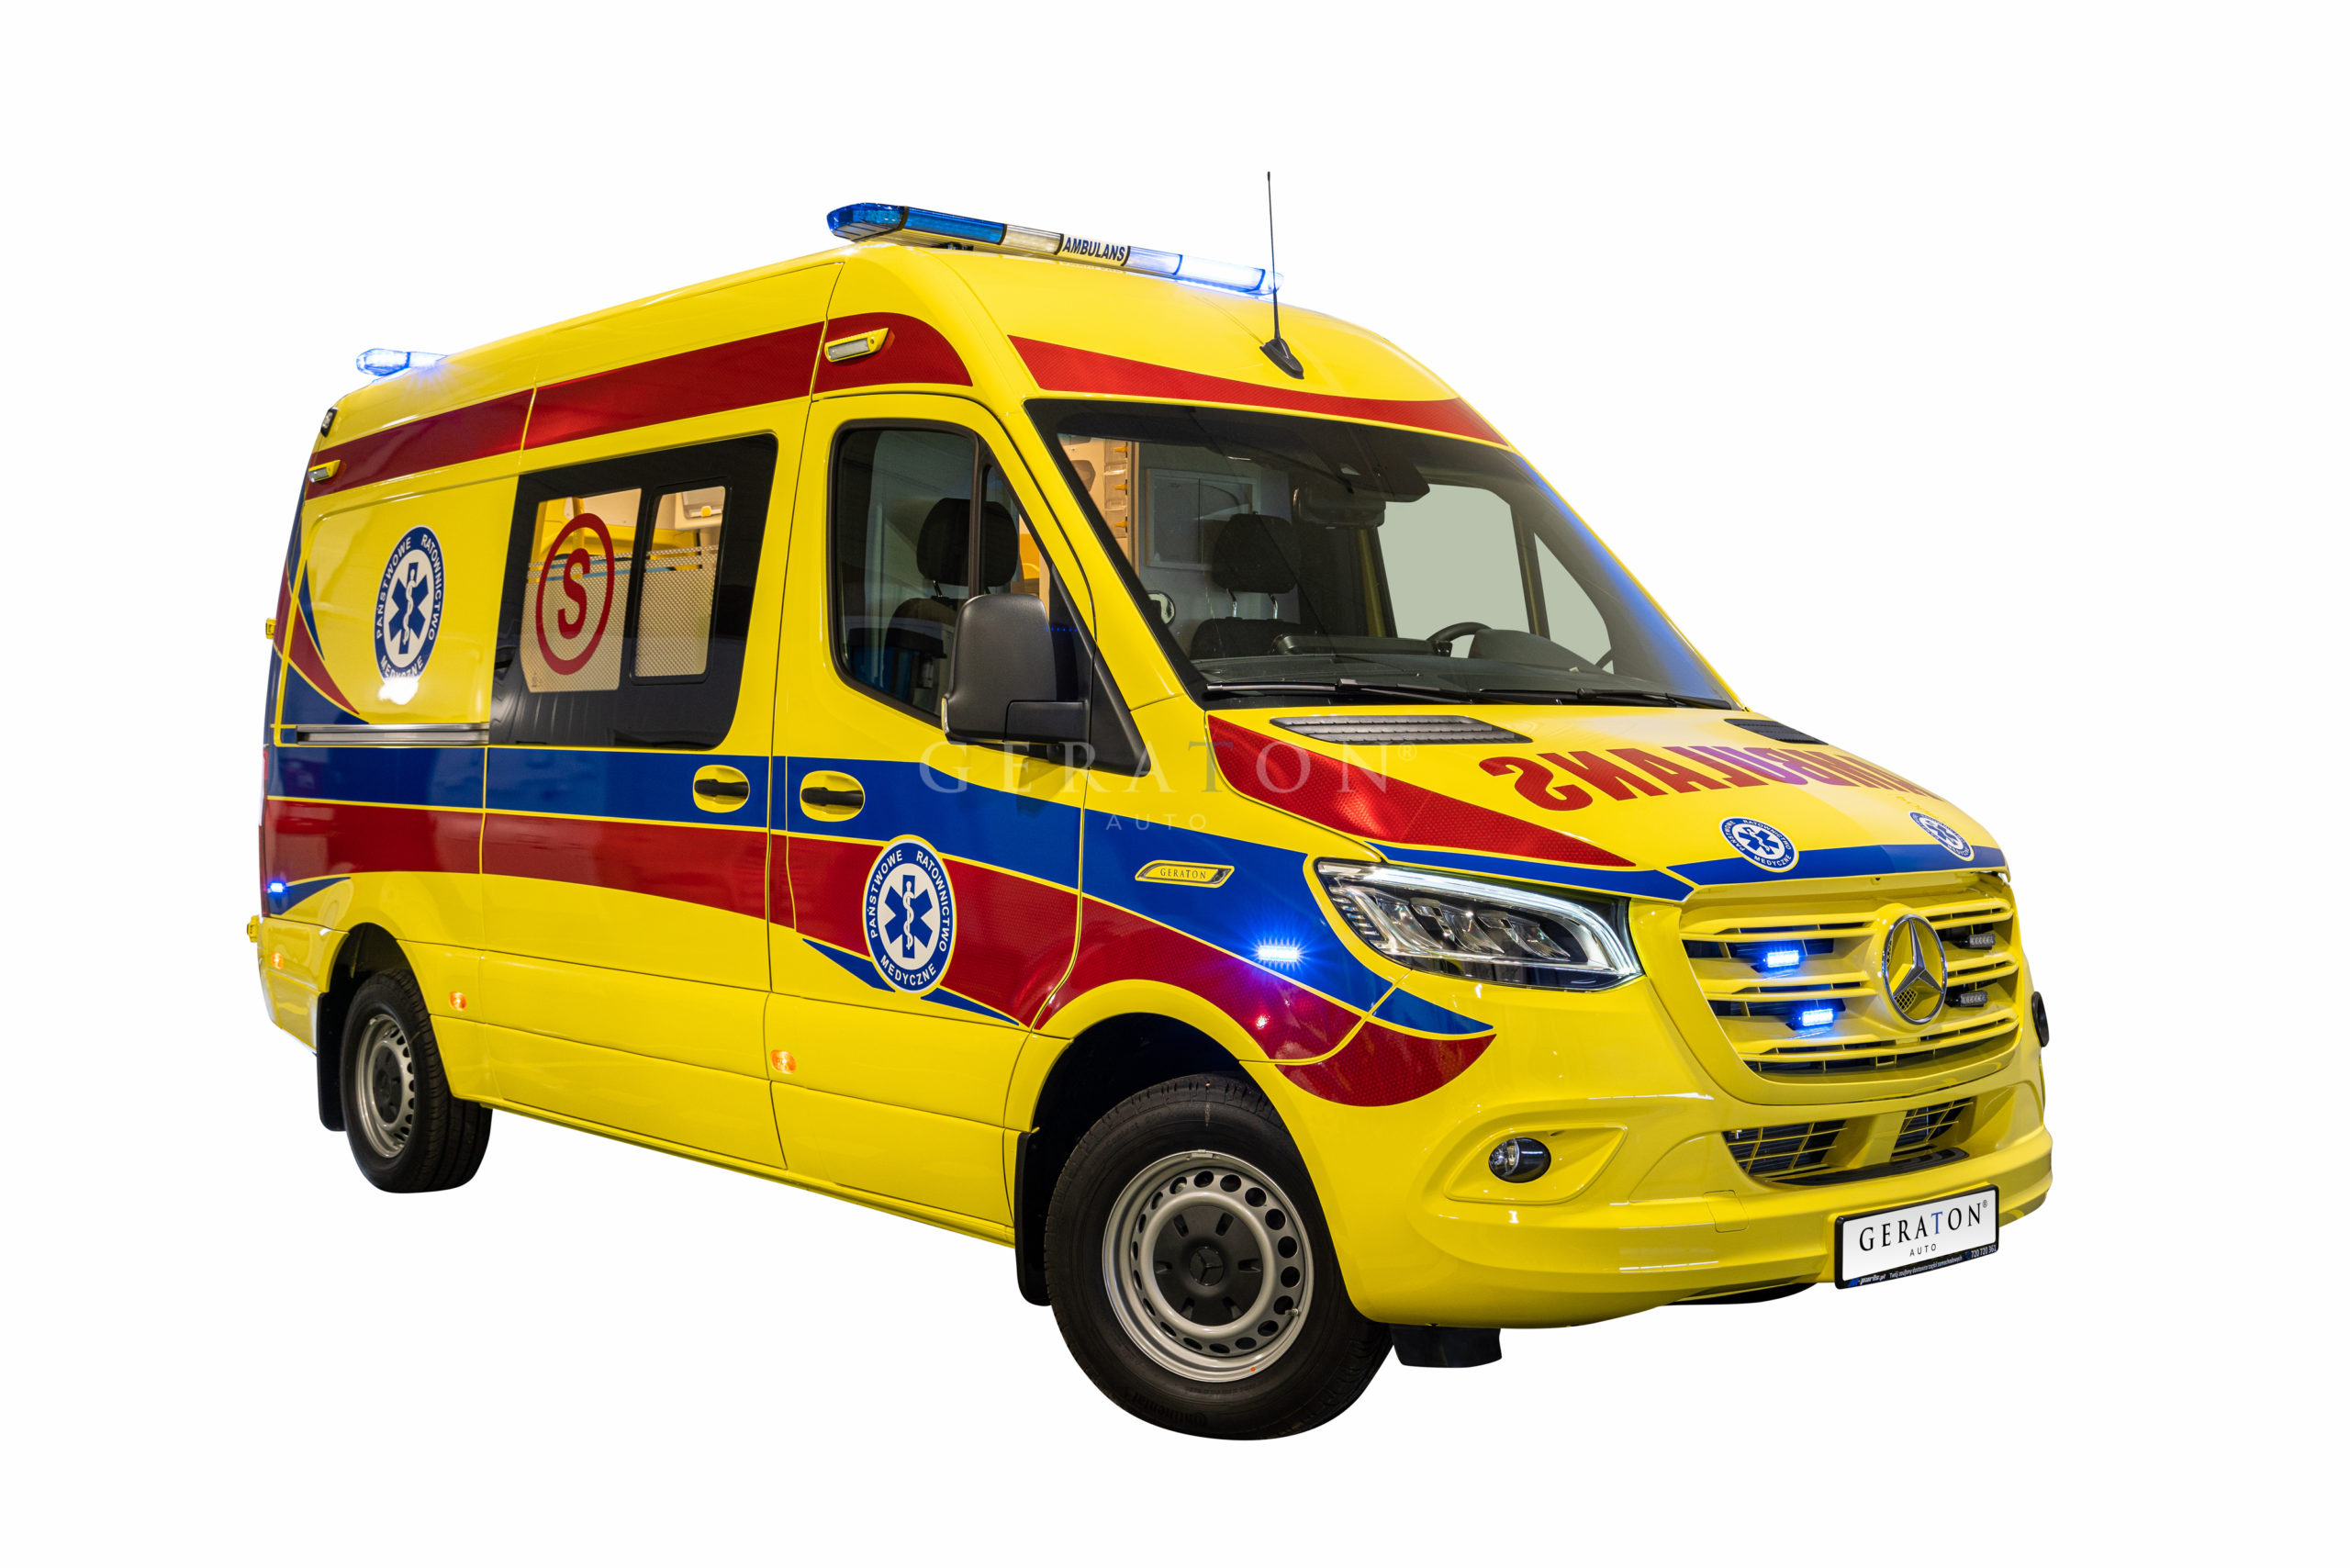 GeratonAuto_Sprinter_ambulans Sprinter_back